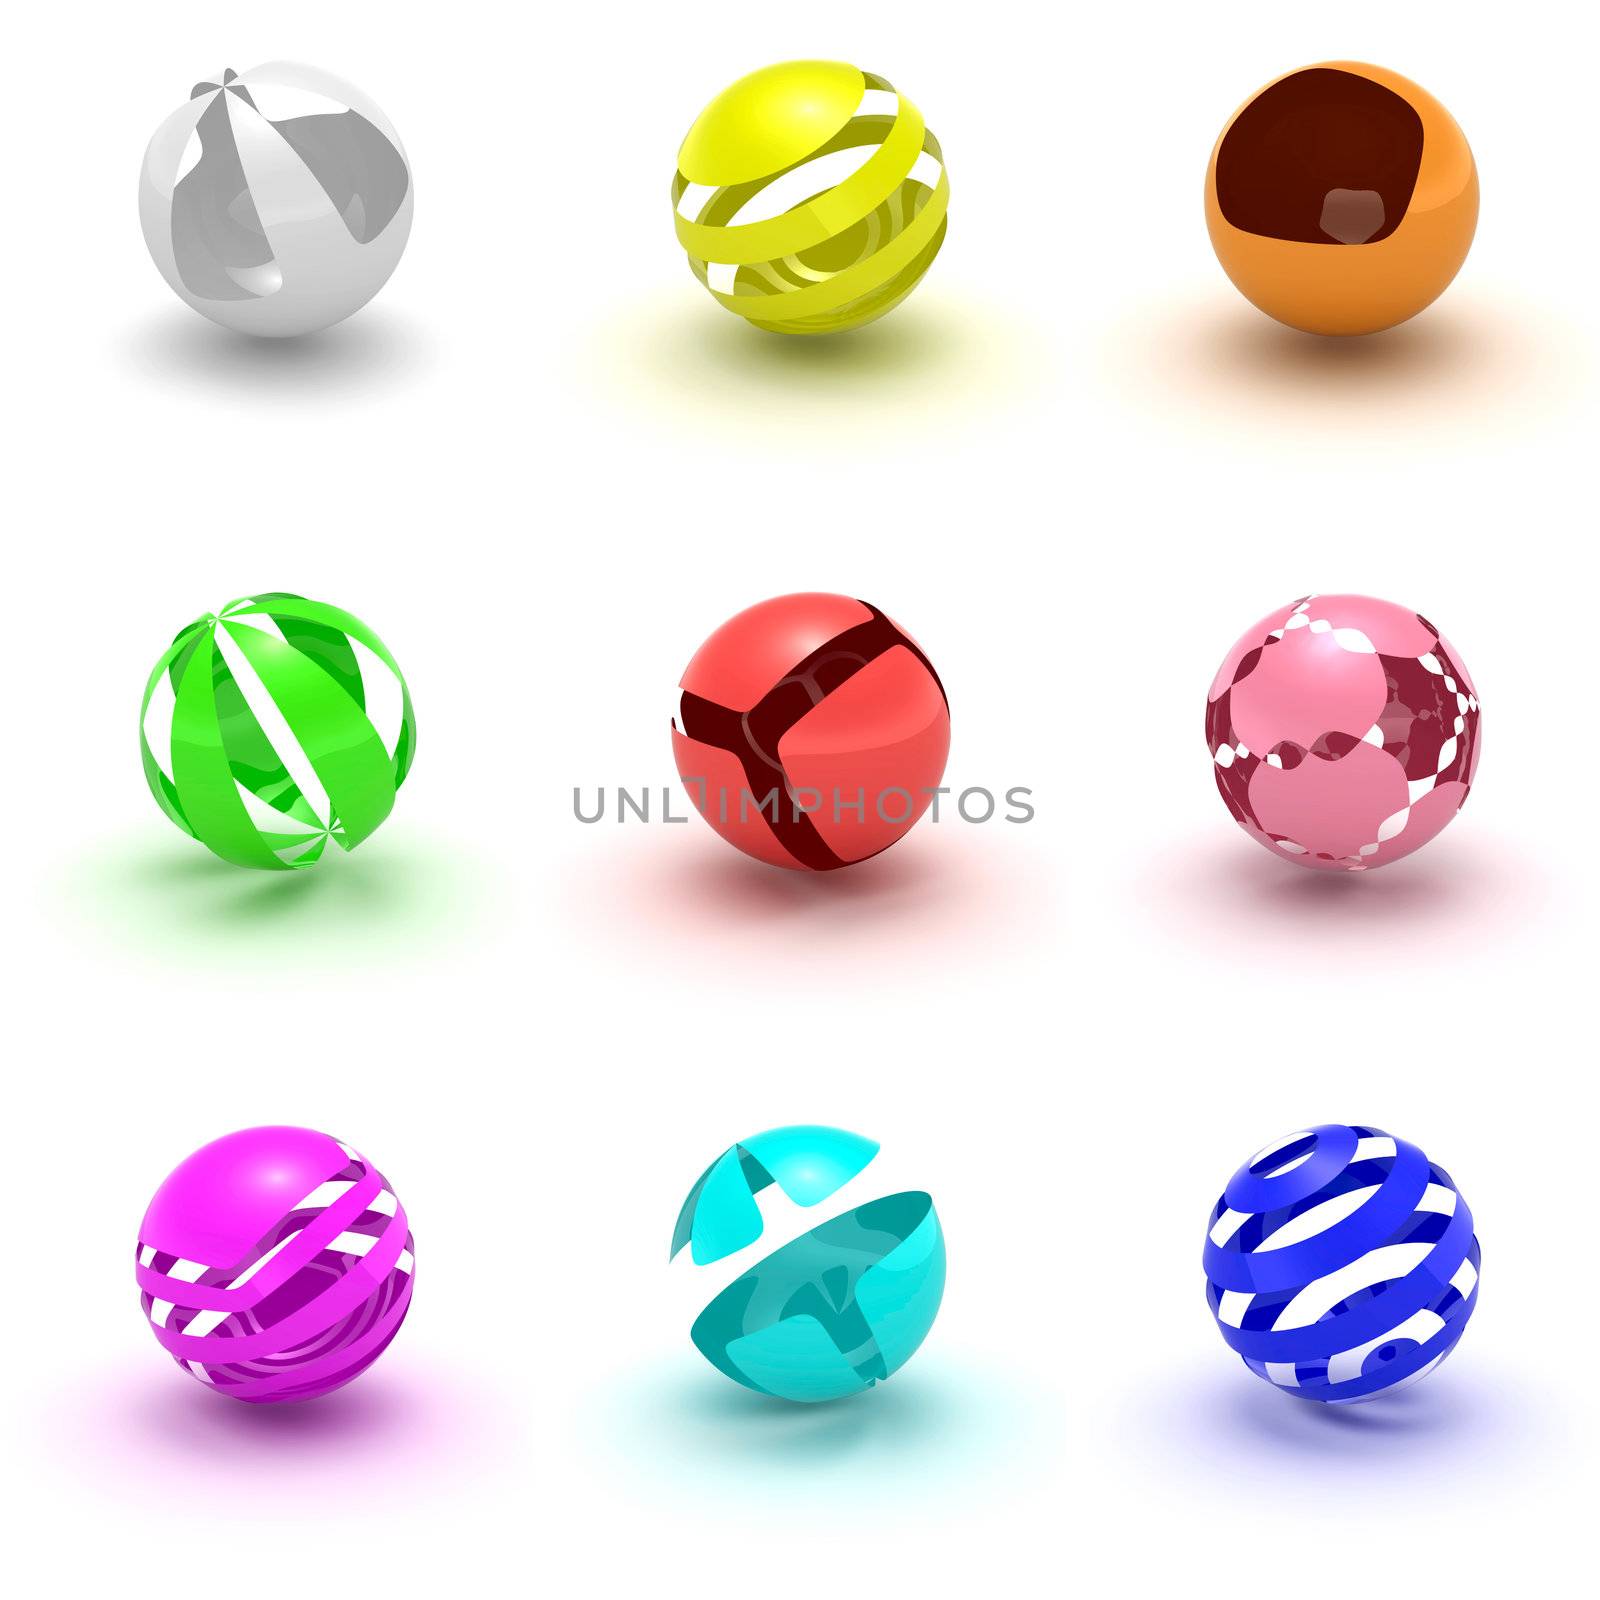 Spheres icons set isolated on white background.